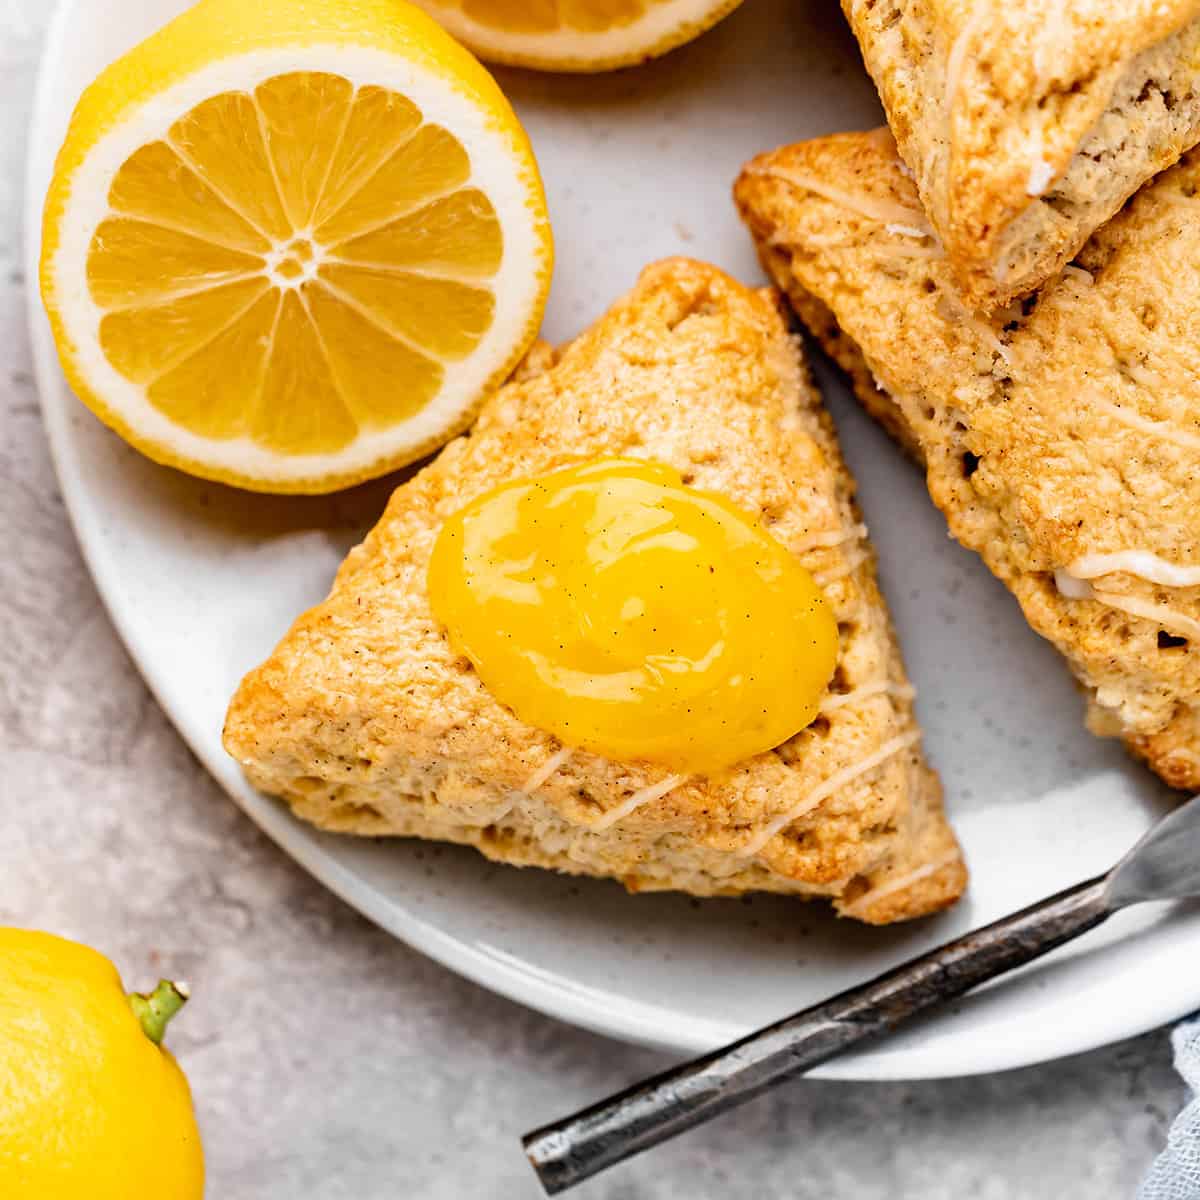 Lemon Curd spread onto a scone